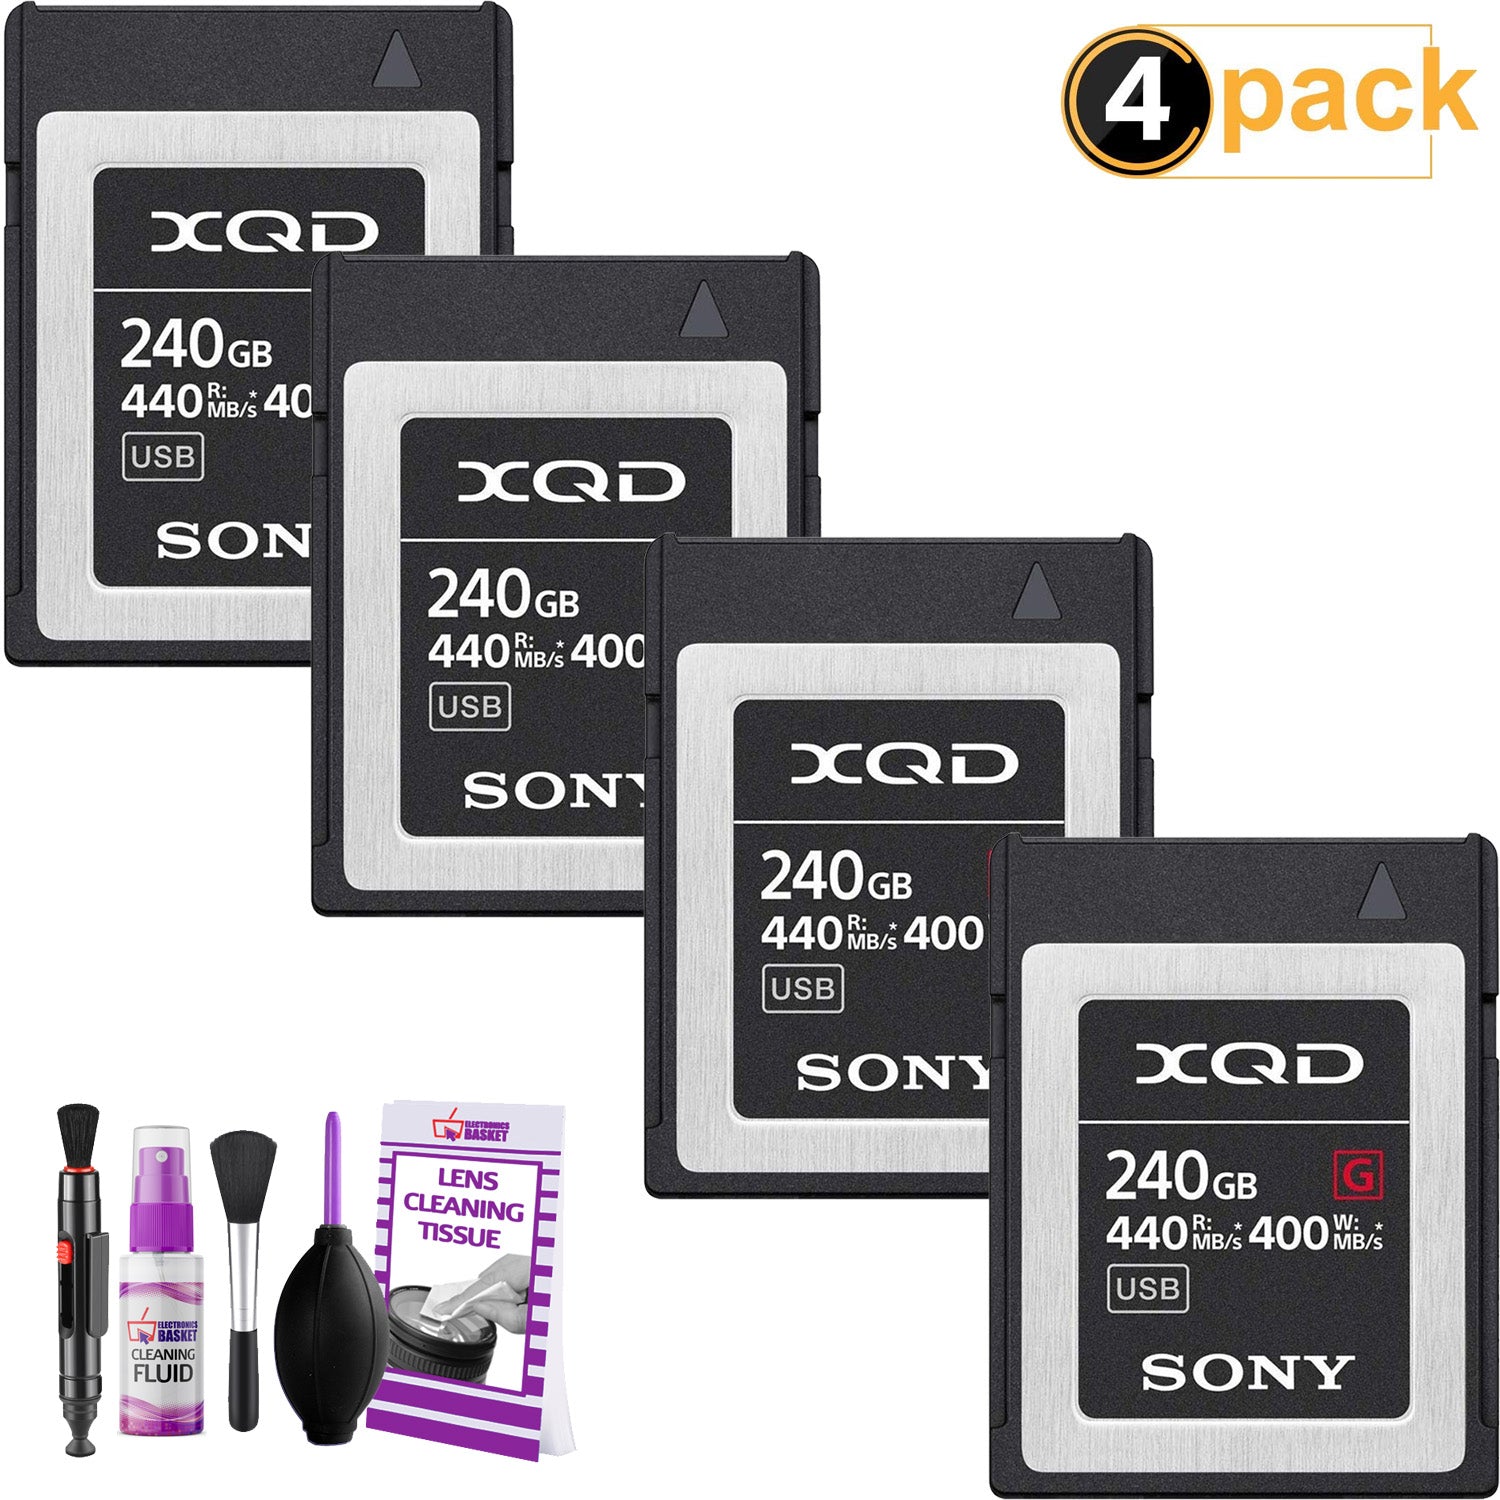 Sony Professional XQD G Series 240GB Memory Card (QD-G240F) (4-Pack)